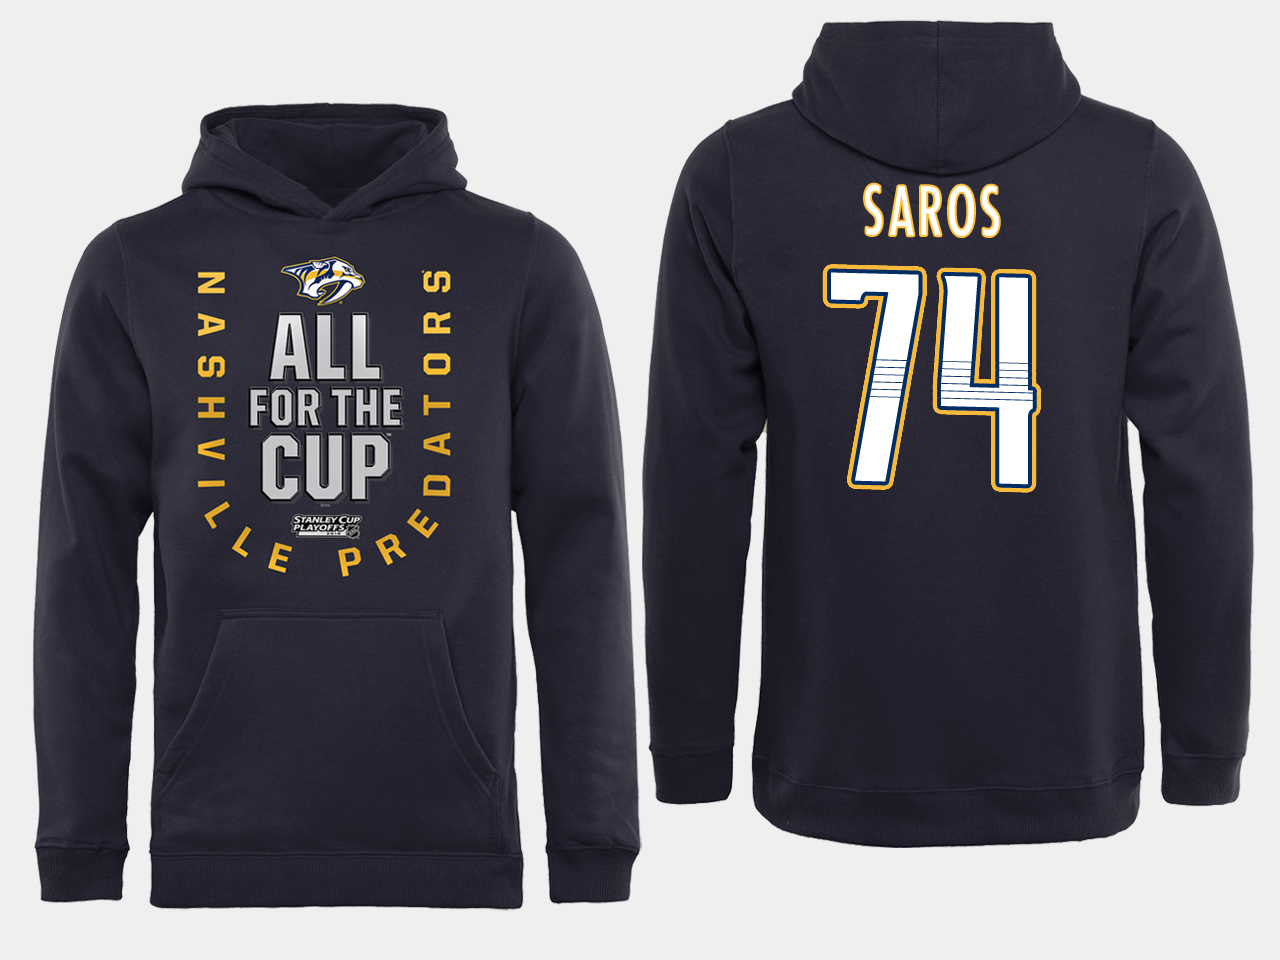 Men NHL Adidas Nashville Predators #74 Saros black ALL for the Cup hoodie